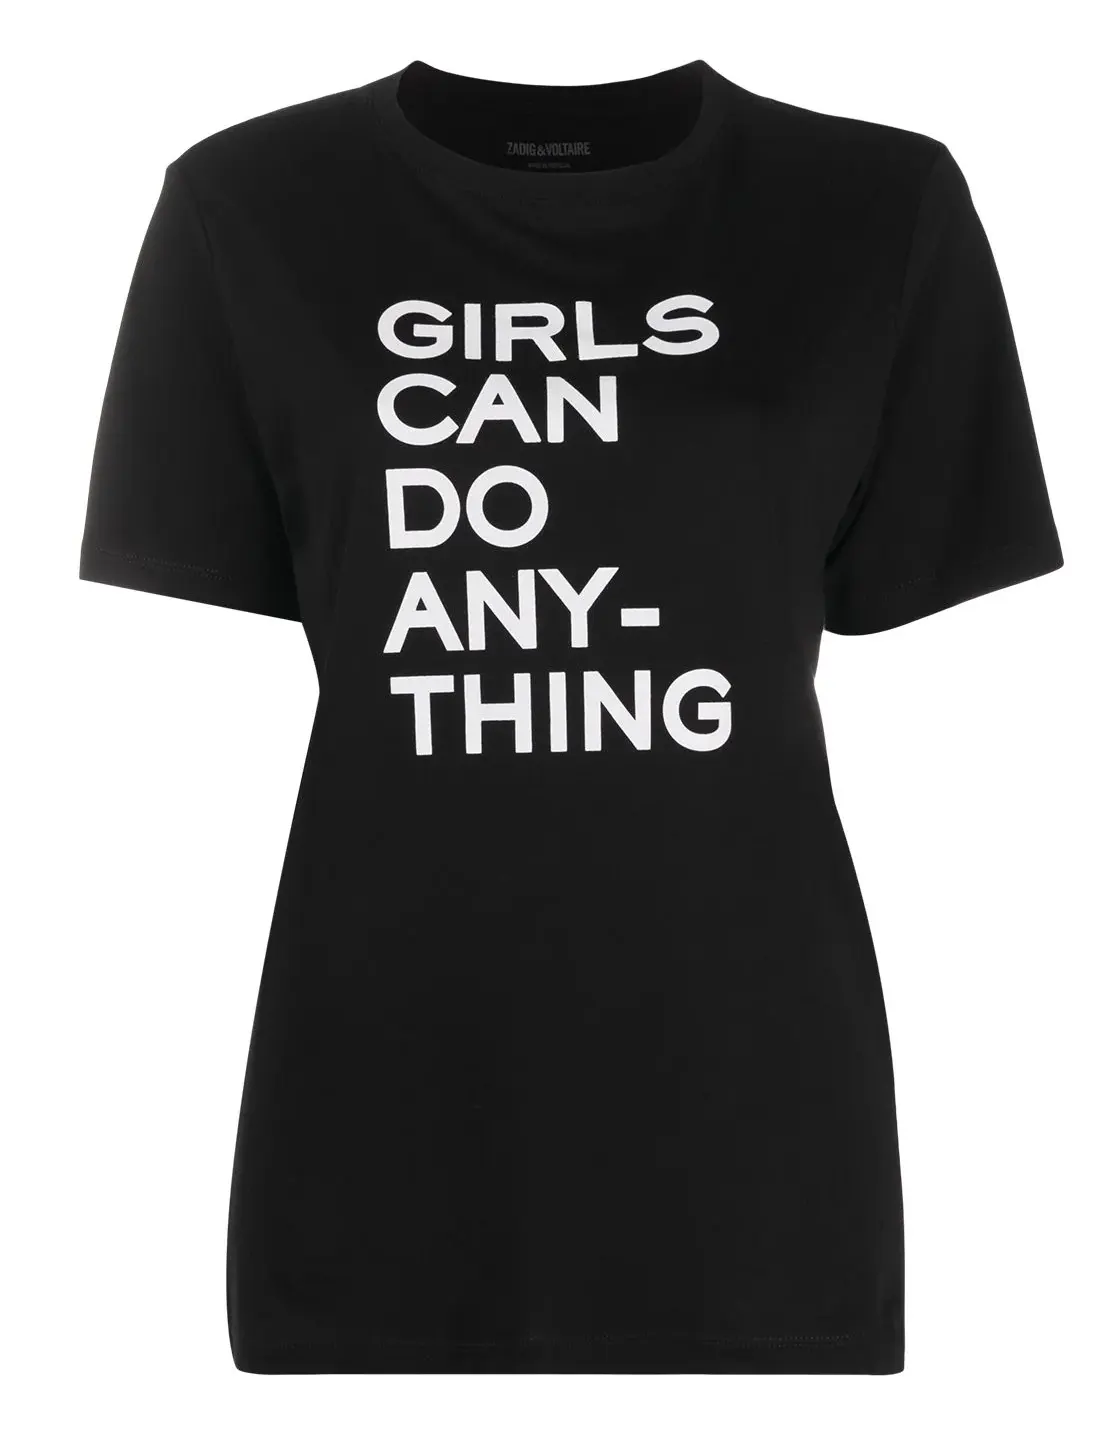 'Girls can do anything' t-shirt, black